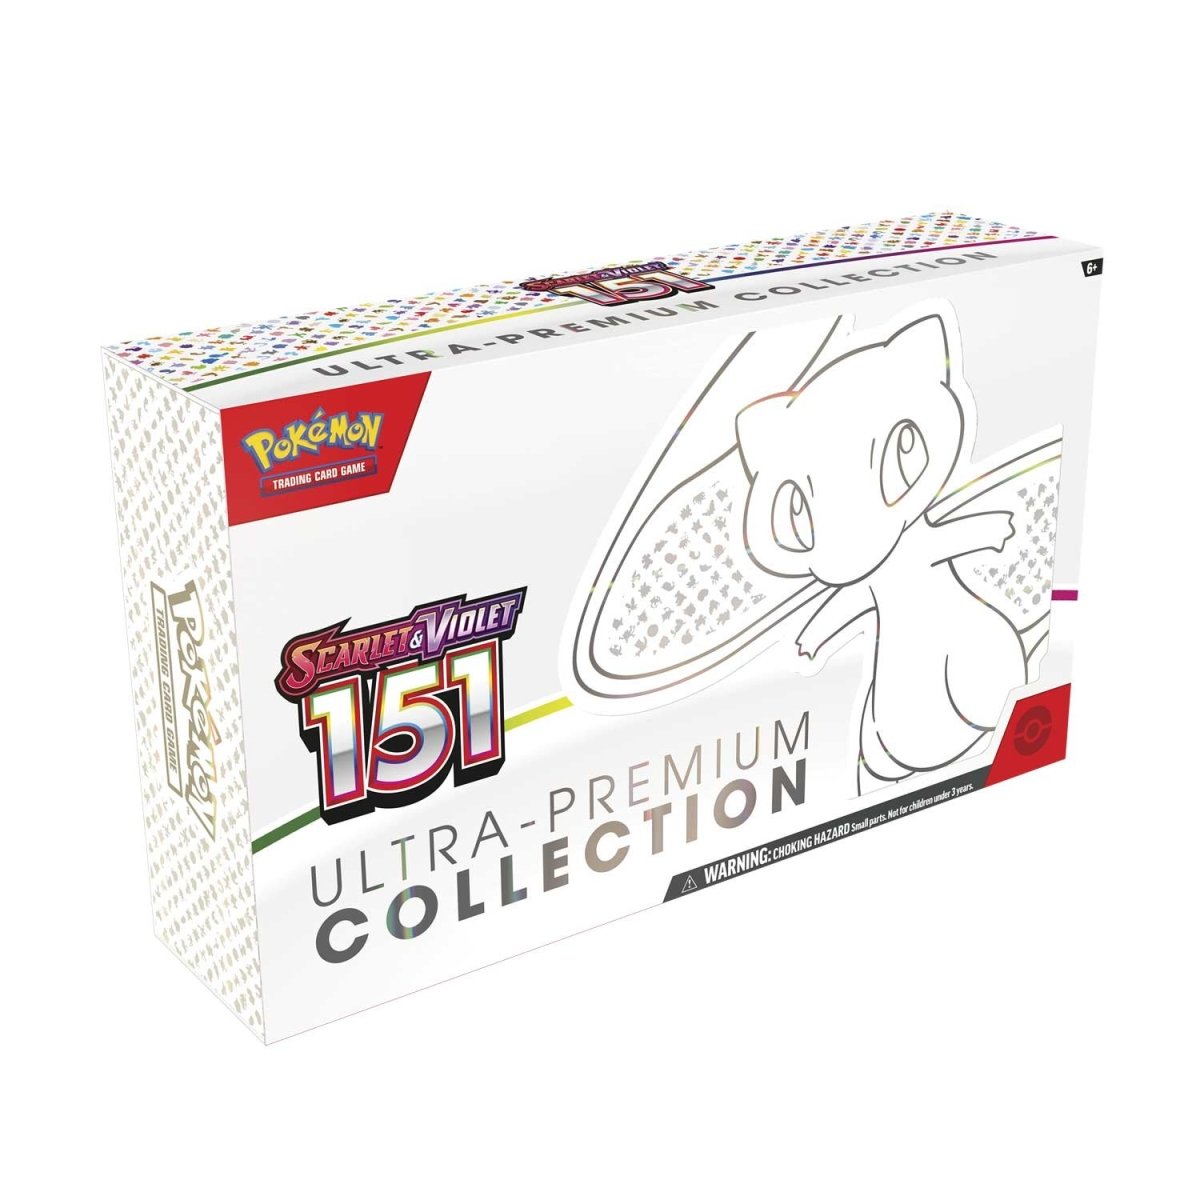 Pokémon TCG: Scarlet & Violet-151 Ultra-Premium Collection (PRE-ORDER)